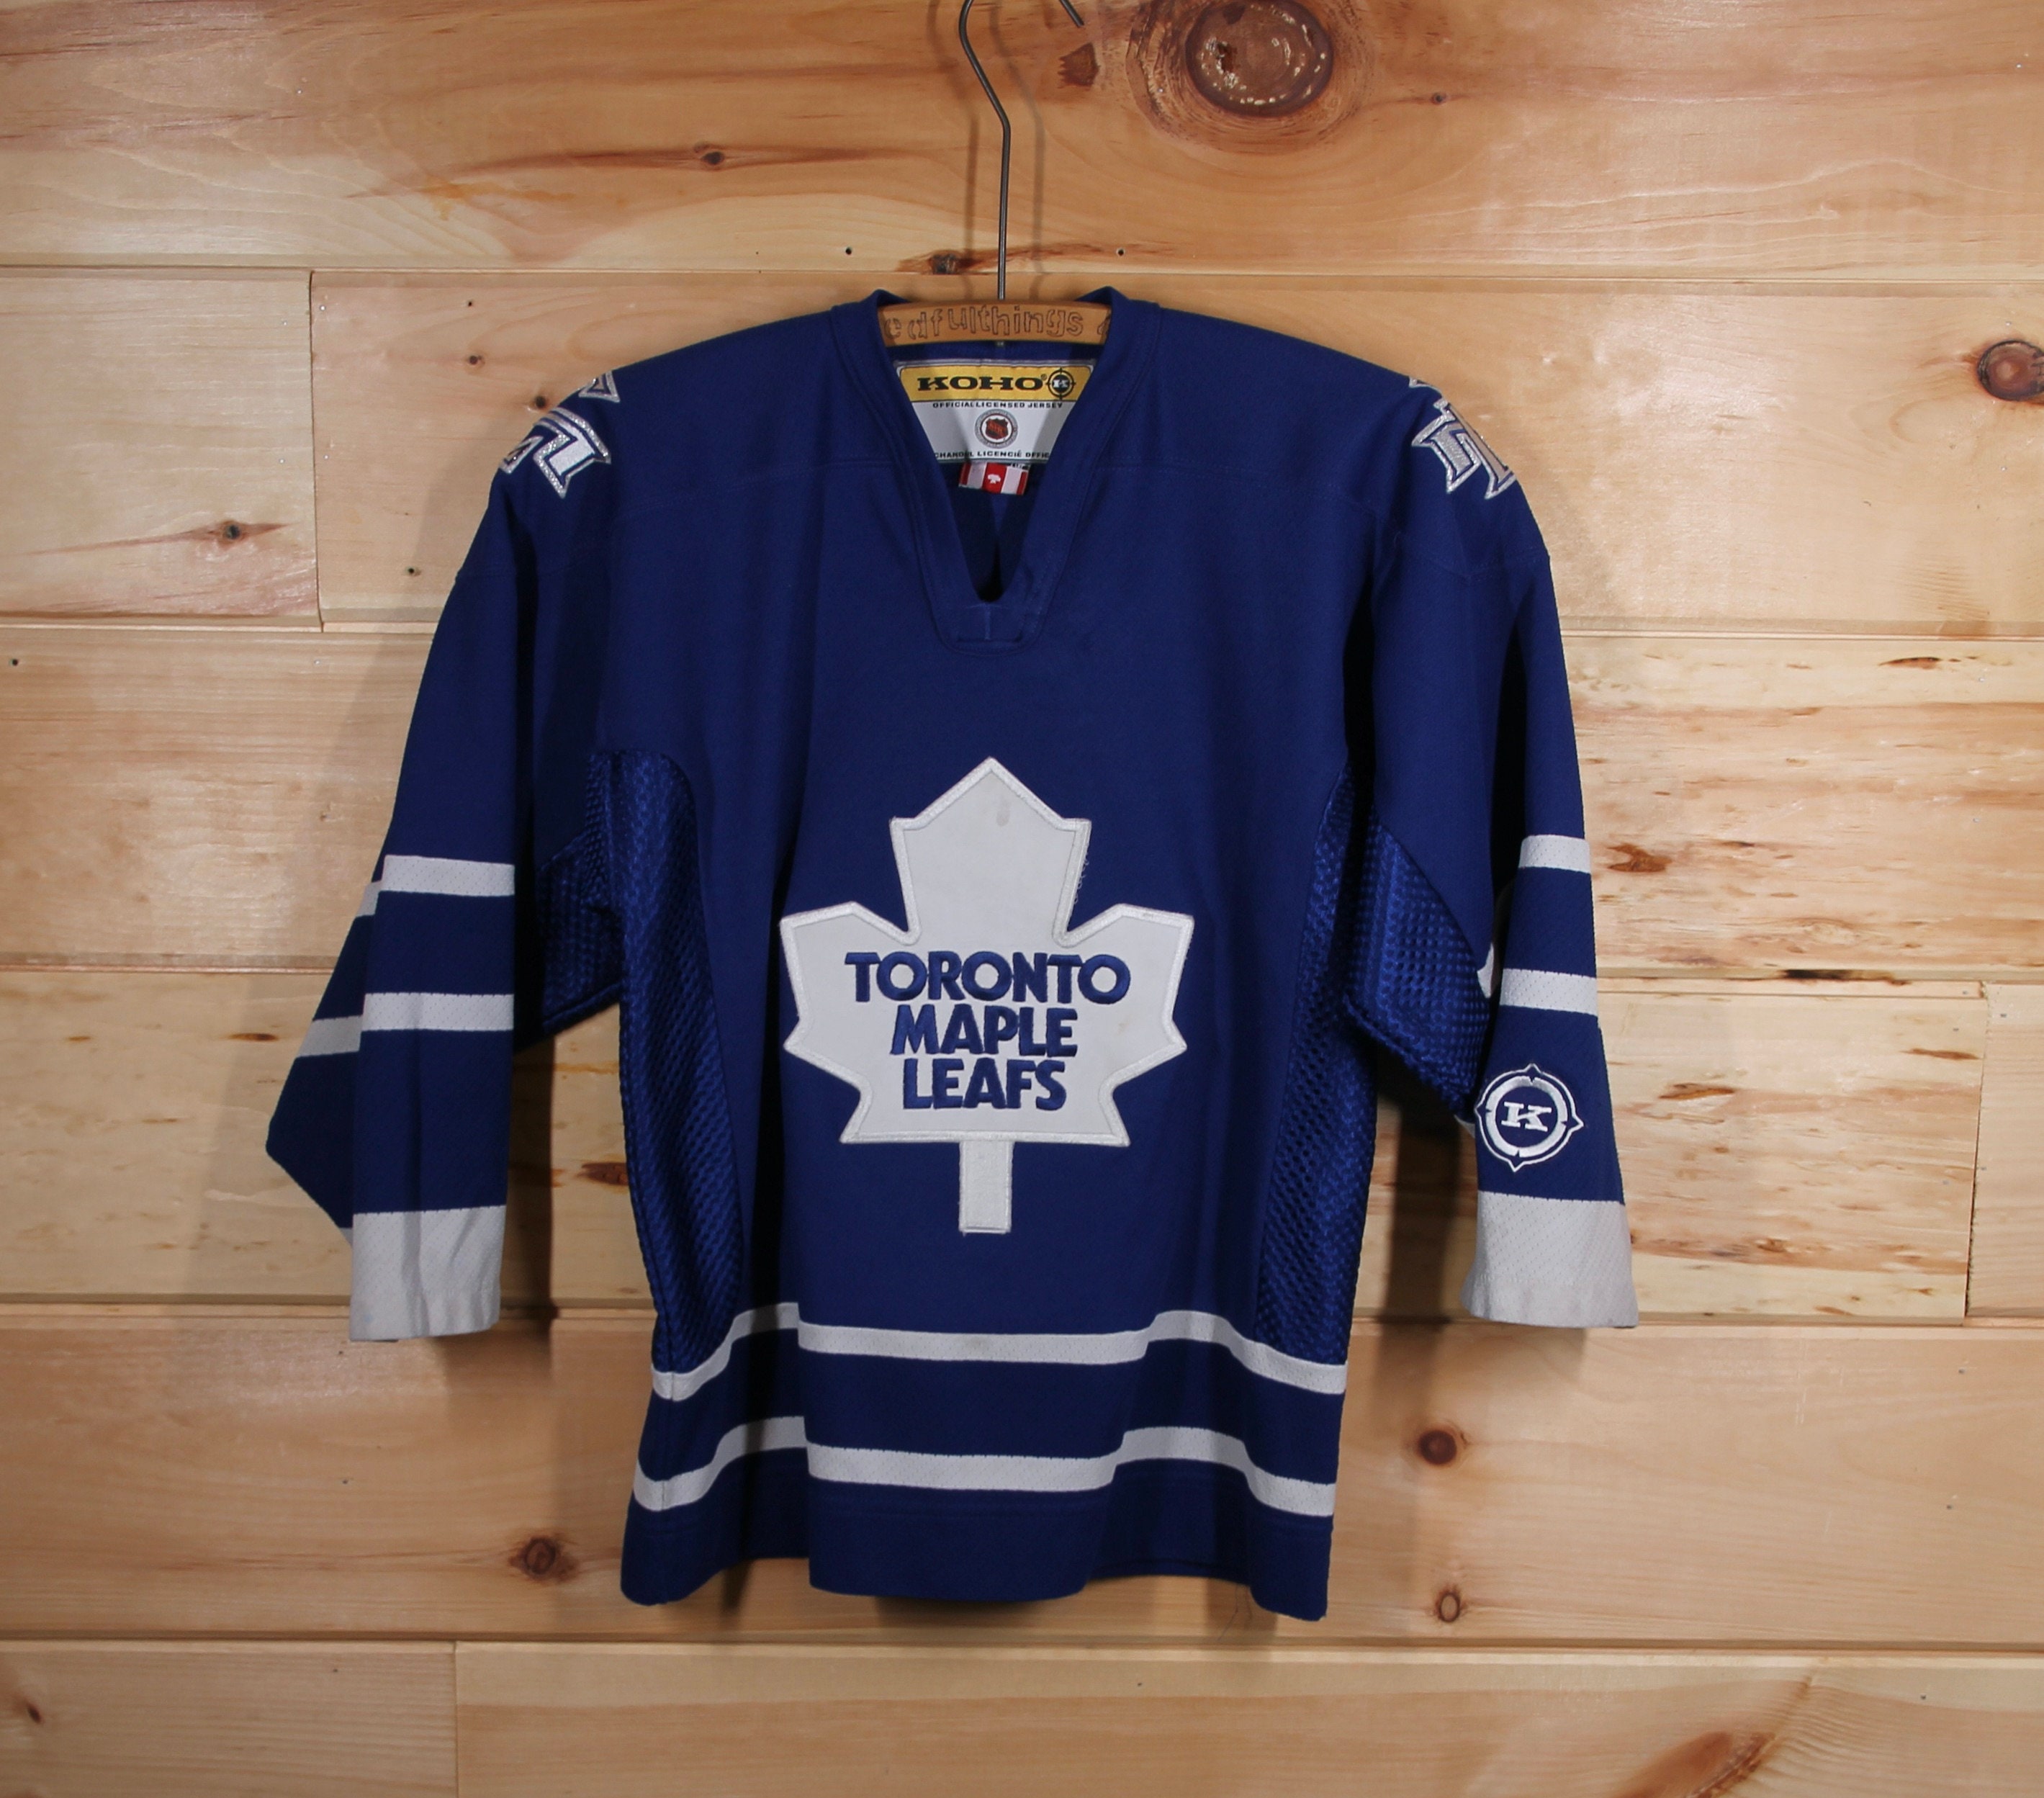 Found great deal on youth Datsyuk jersey : r/hockeyjerseys